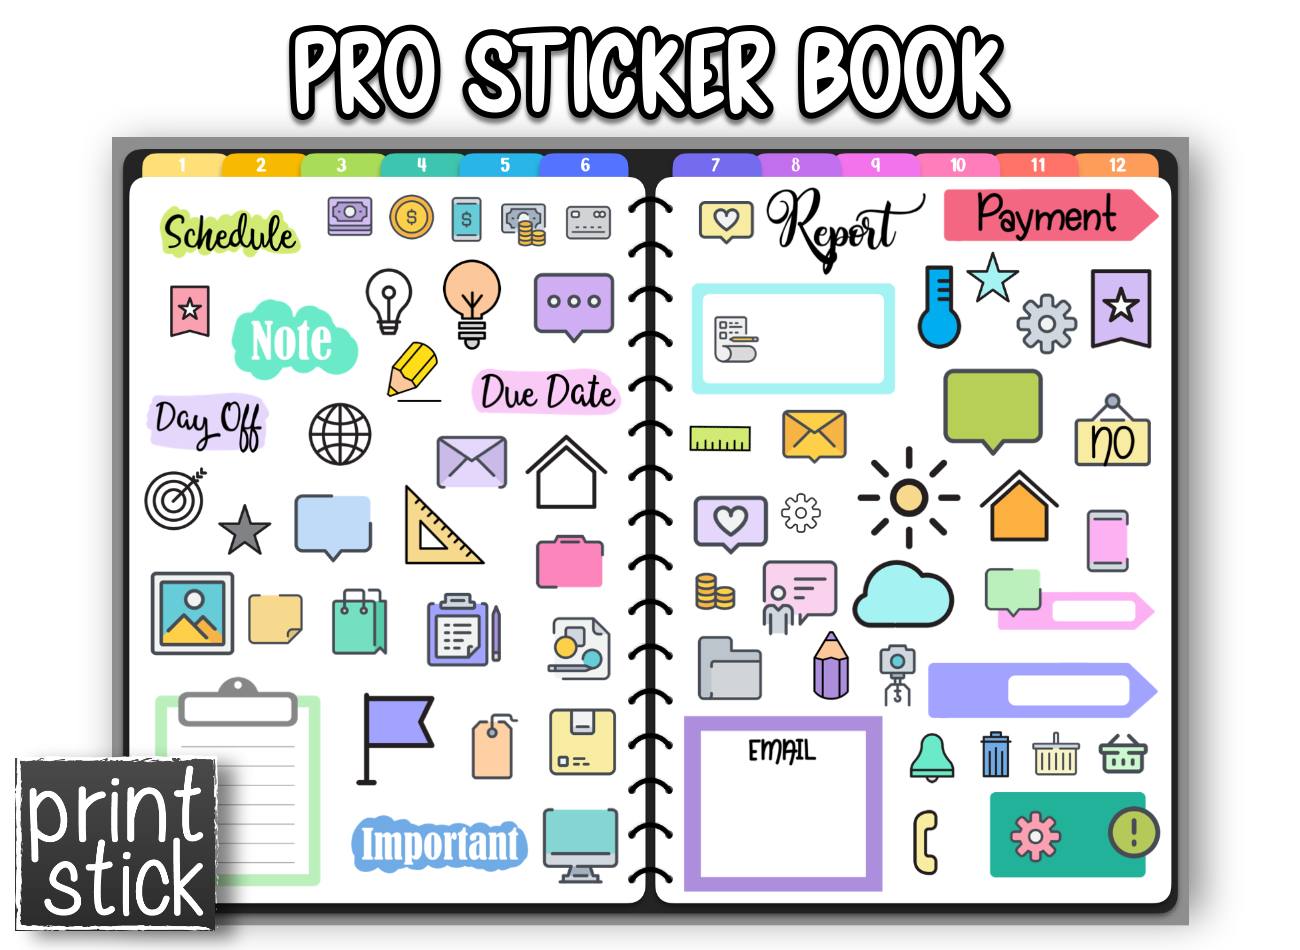 Bo4 - All Sticker Books - Choose one - Print Stick